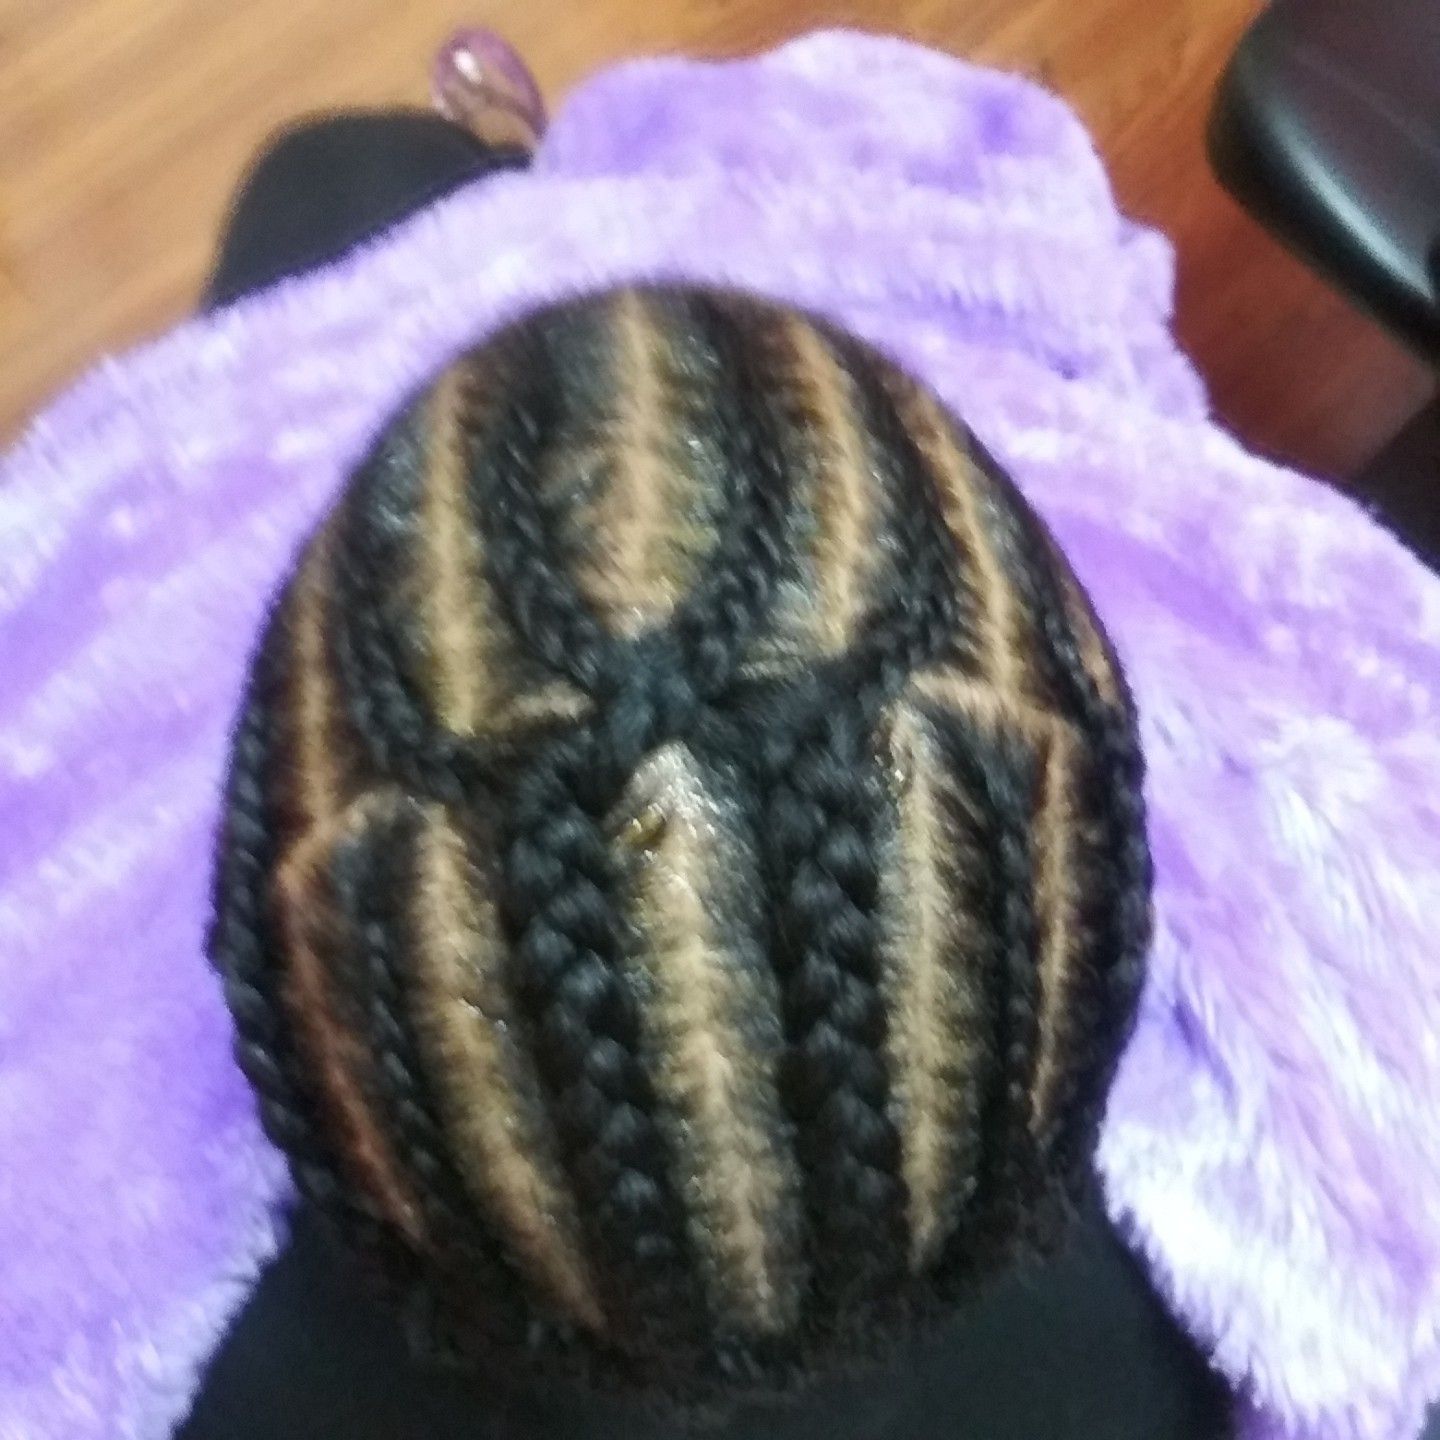 Cornrows (natural hair braided) portfolio